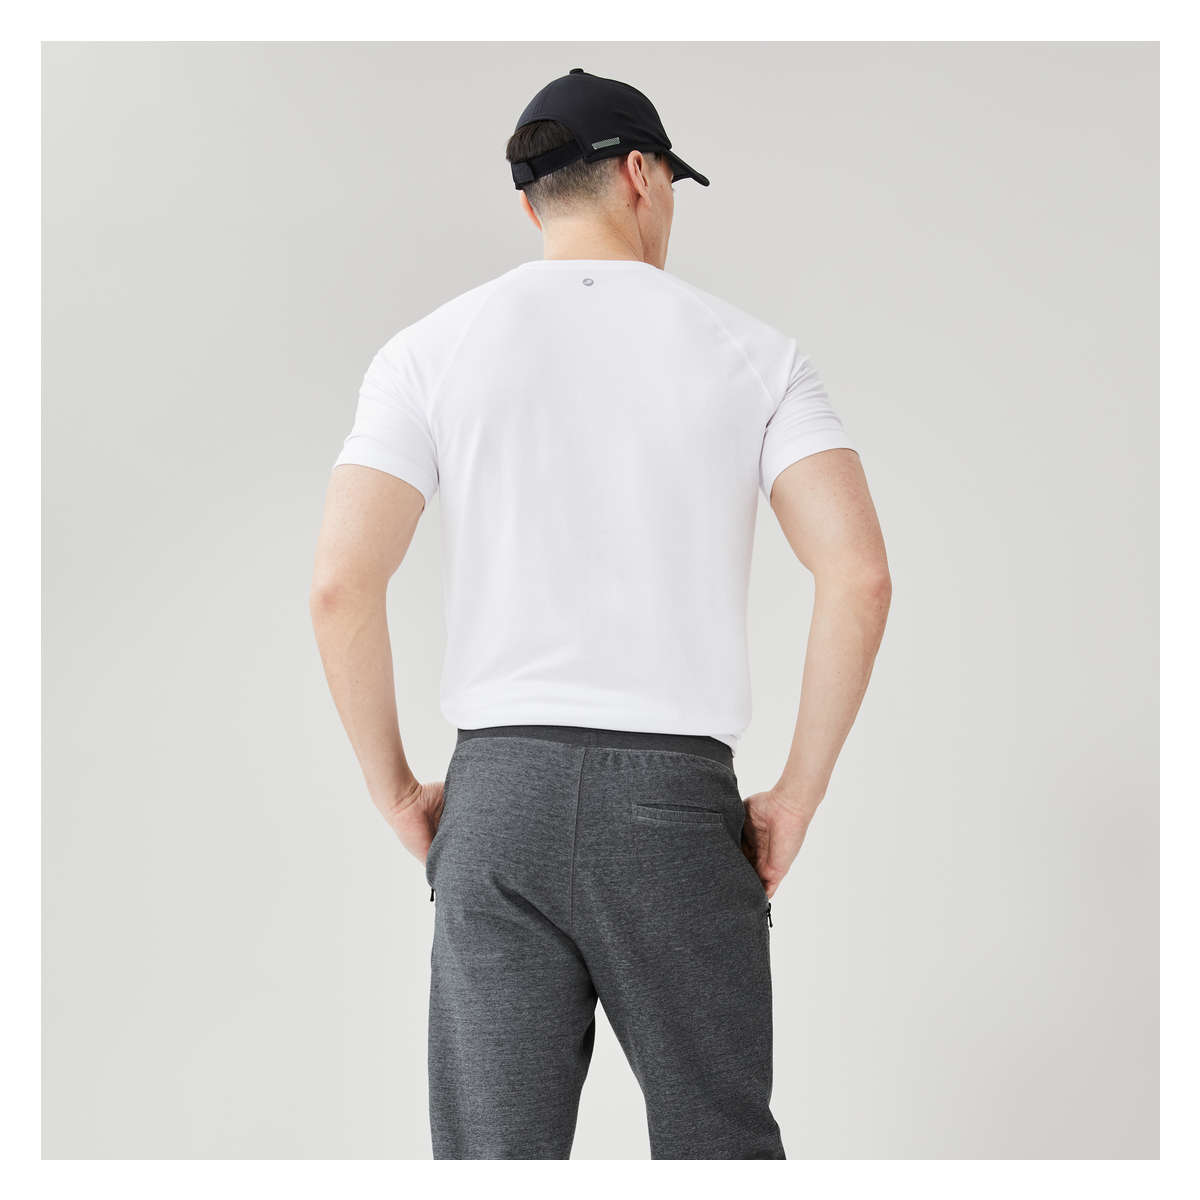 YUHAOTIN Joggers for Men Zipper Pockets Men's Slim Fit Business